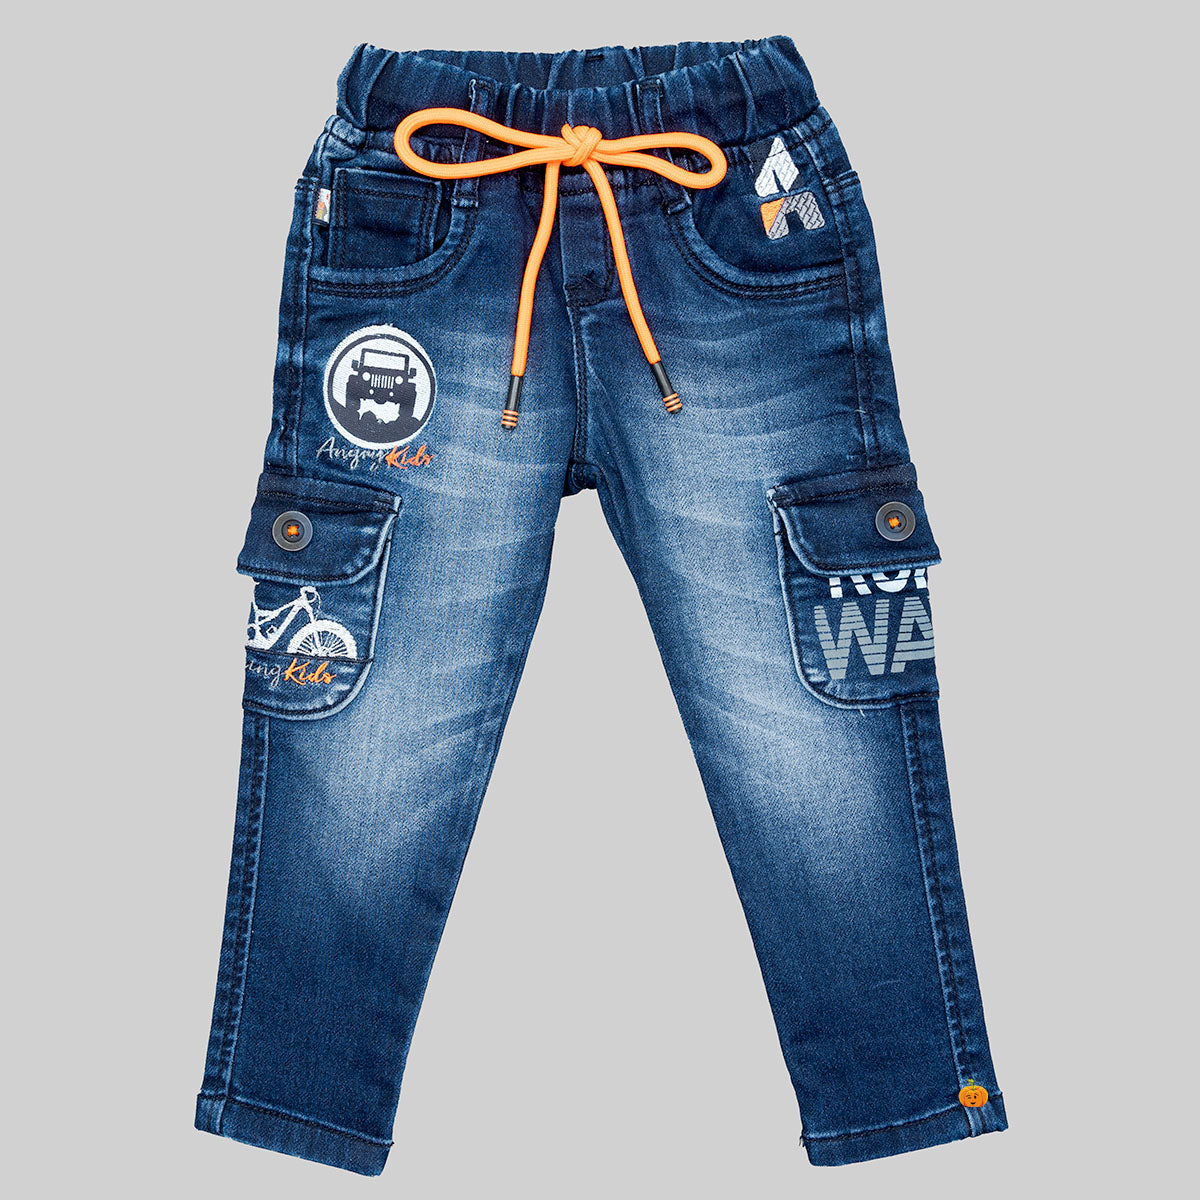 Fashionable Pant For Boys | Kids jeans boys, Kids denim jeans, Boys denim  shorts